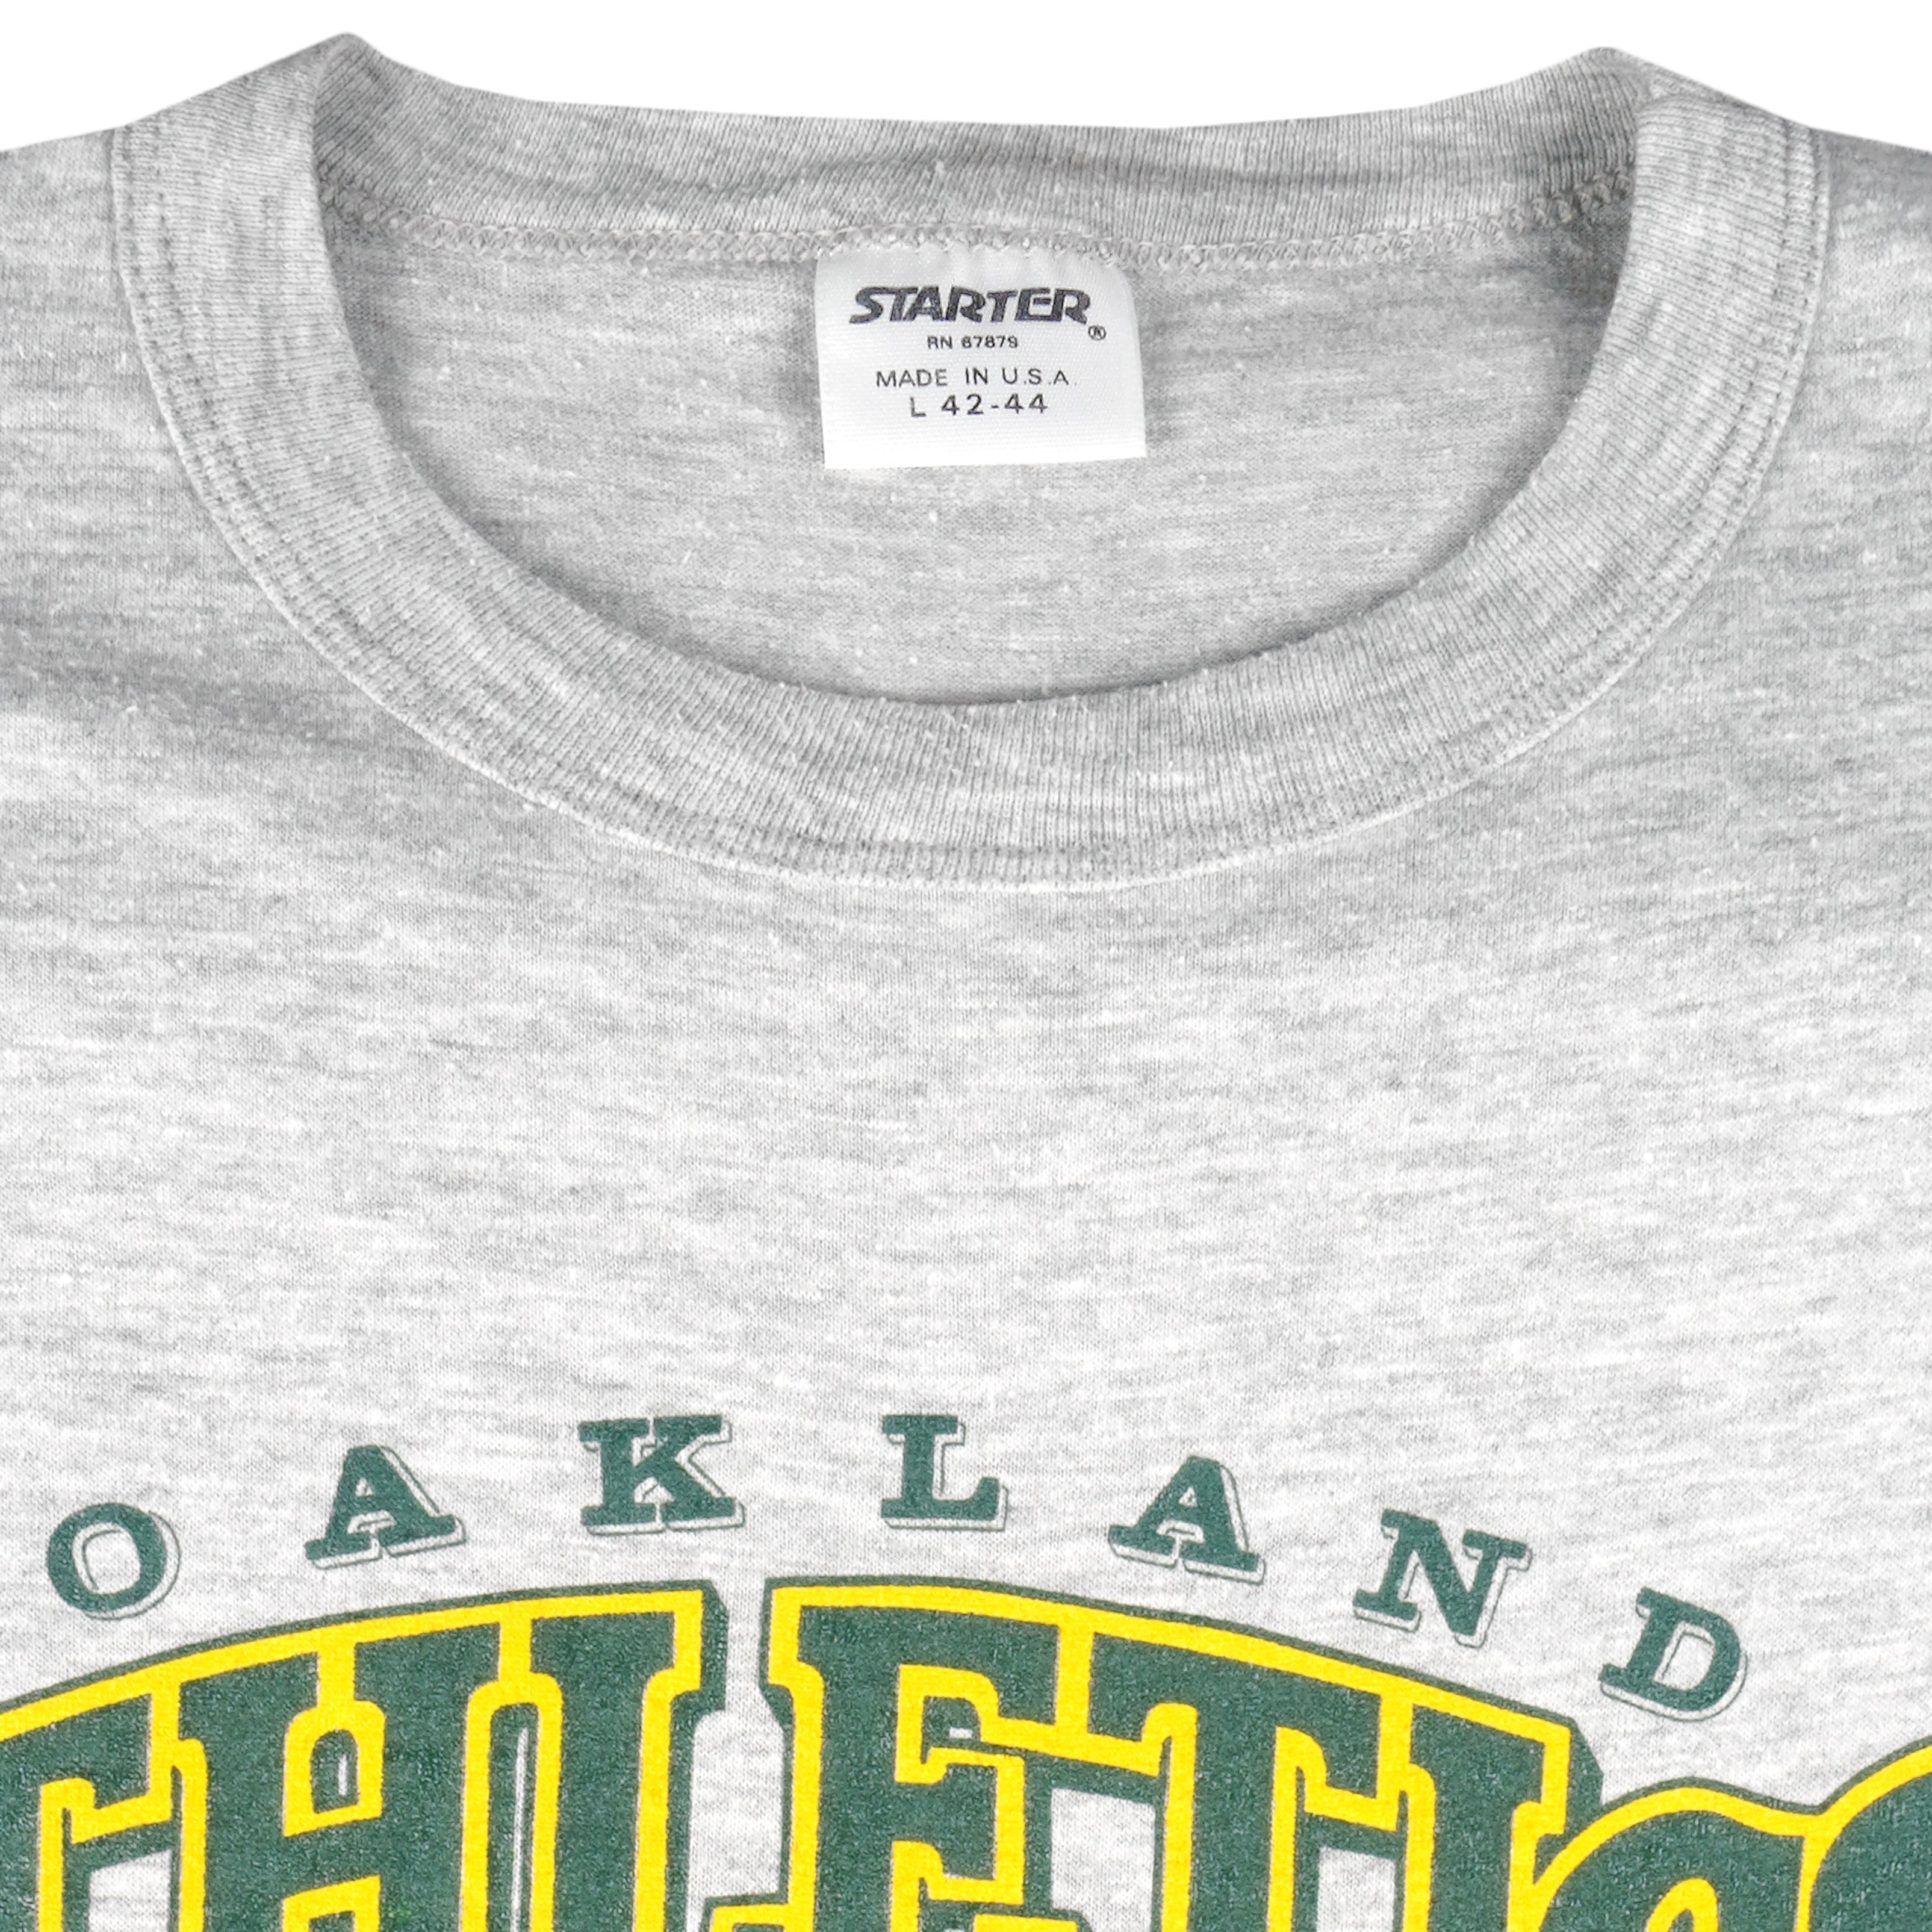 Oakland Athletics Vintage Unisex Shirt - T-shirts Low Price